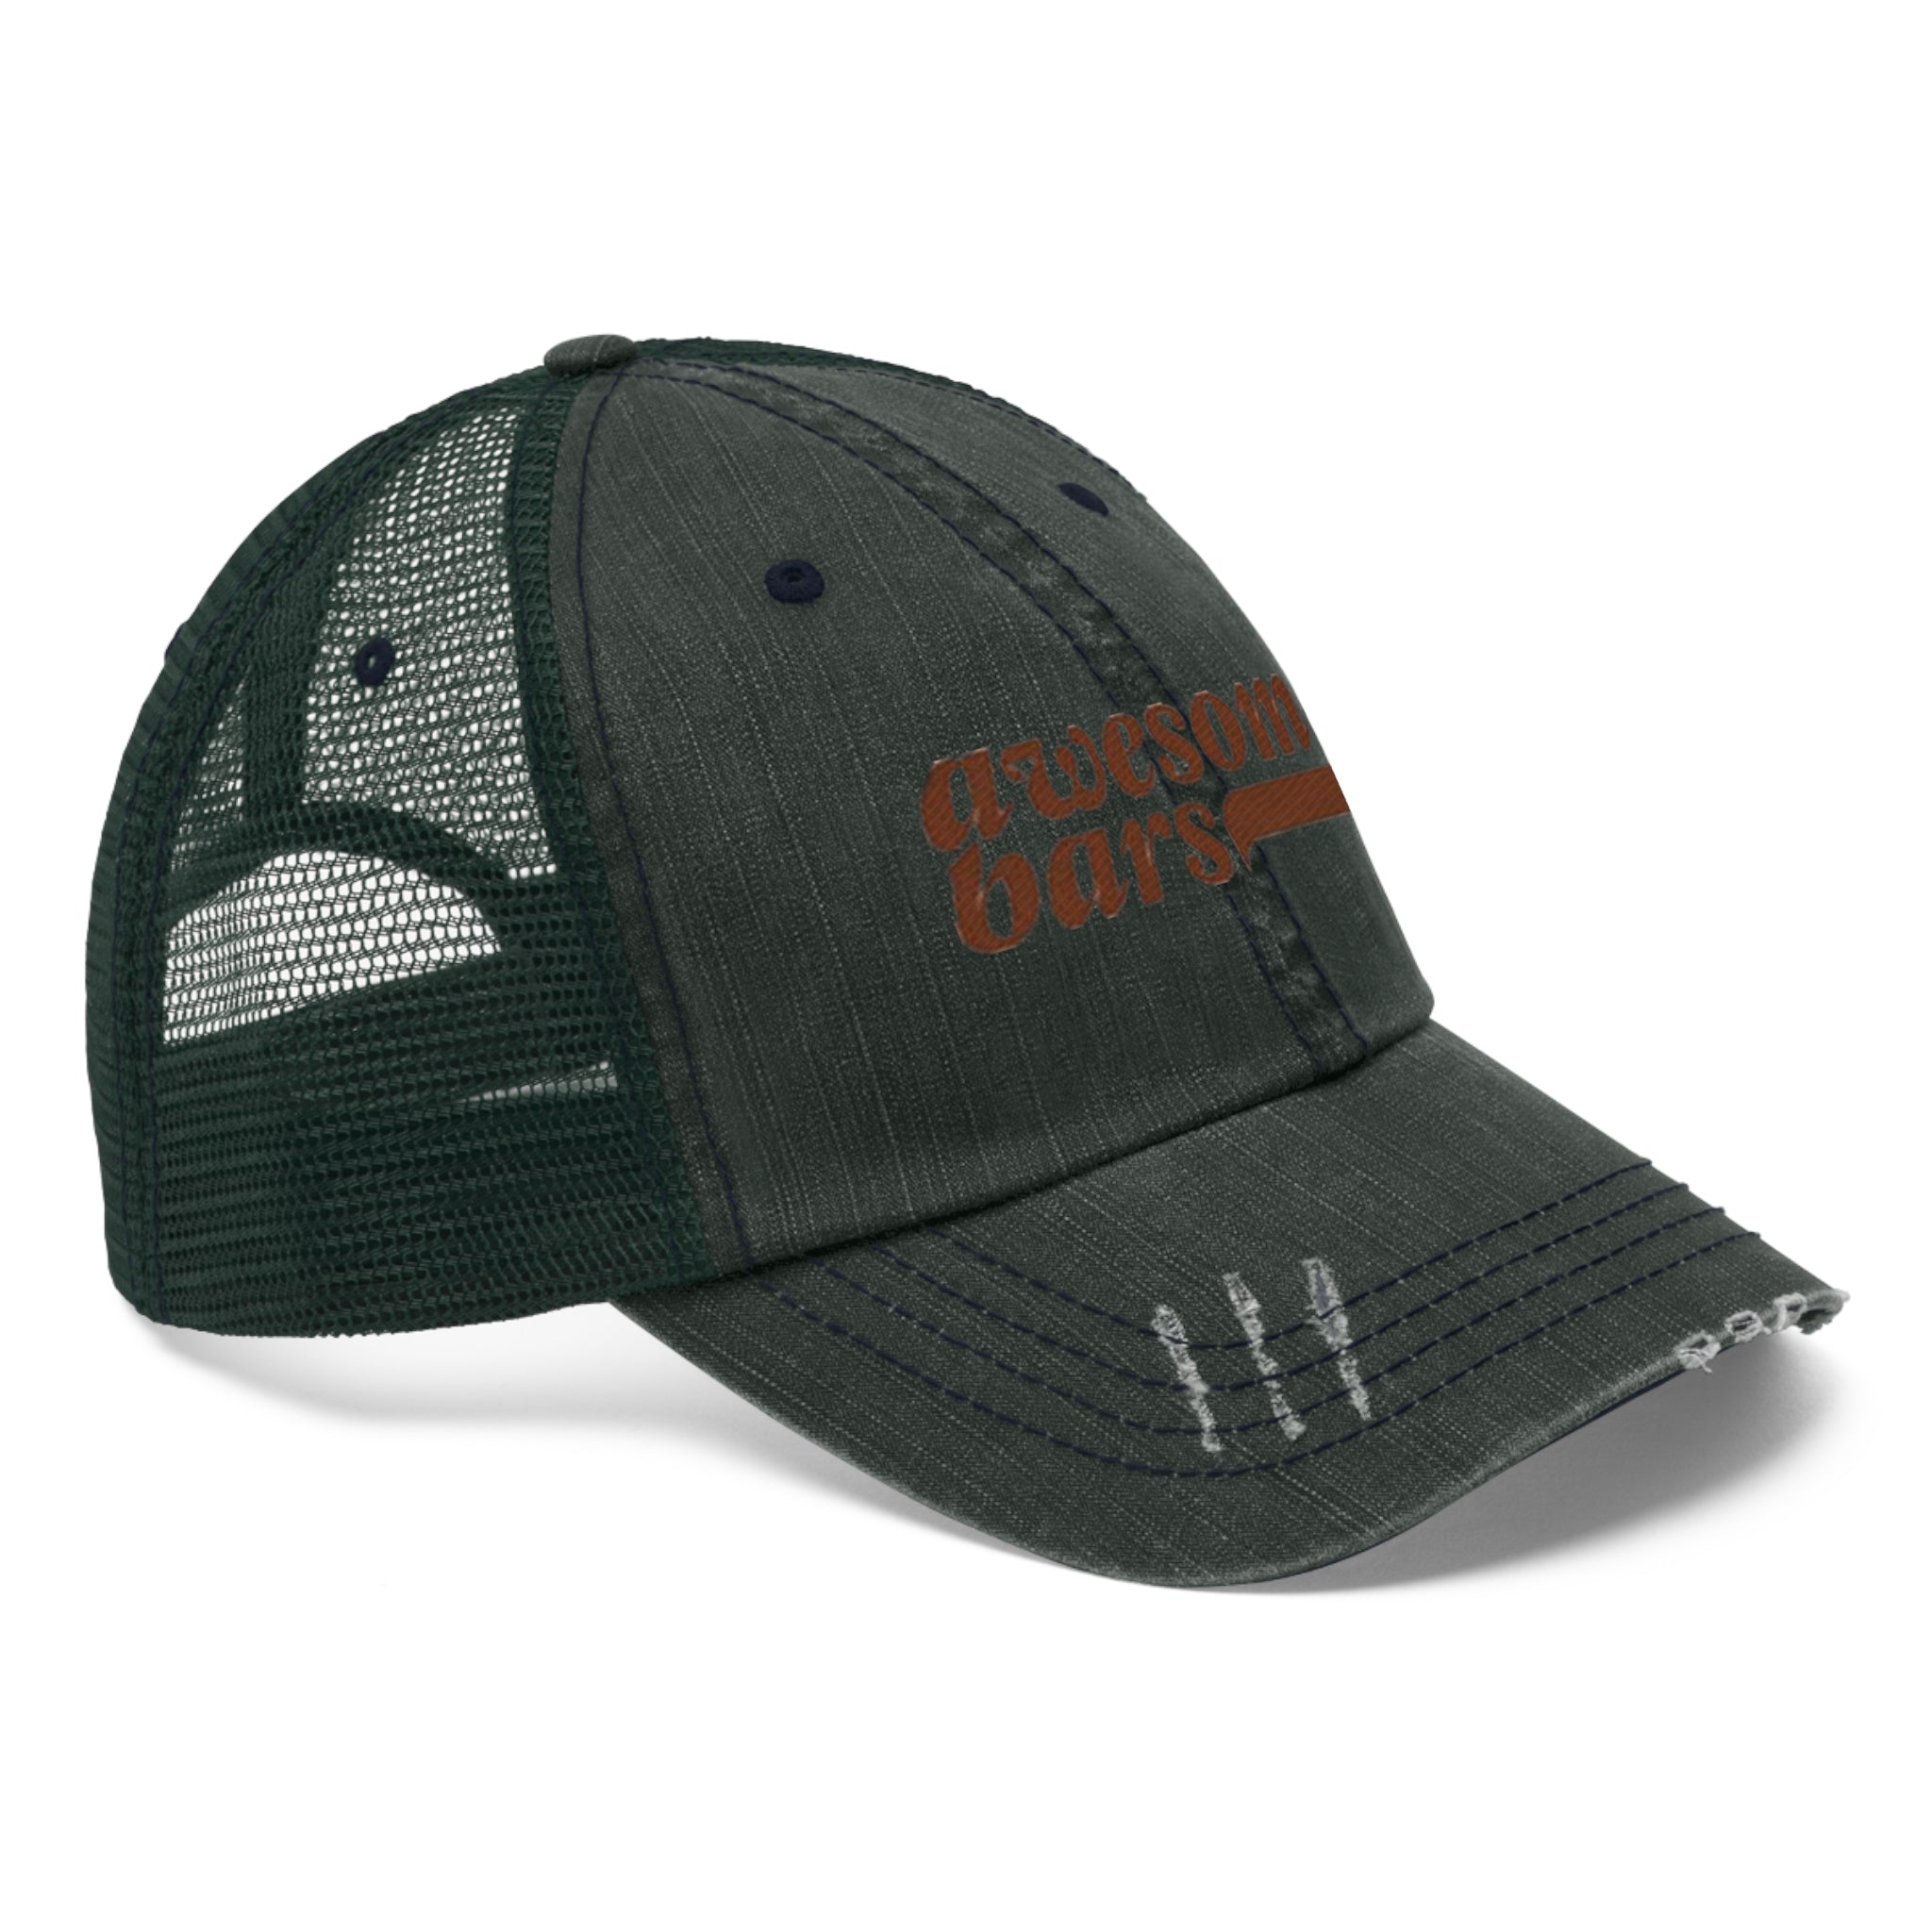 Legacy Fishing Hats